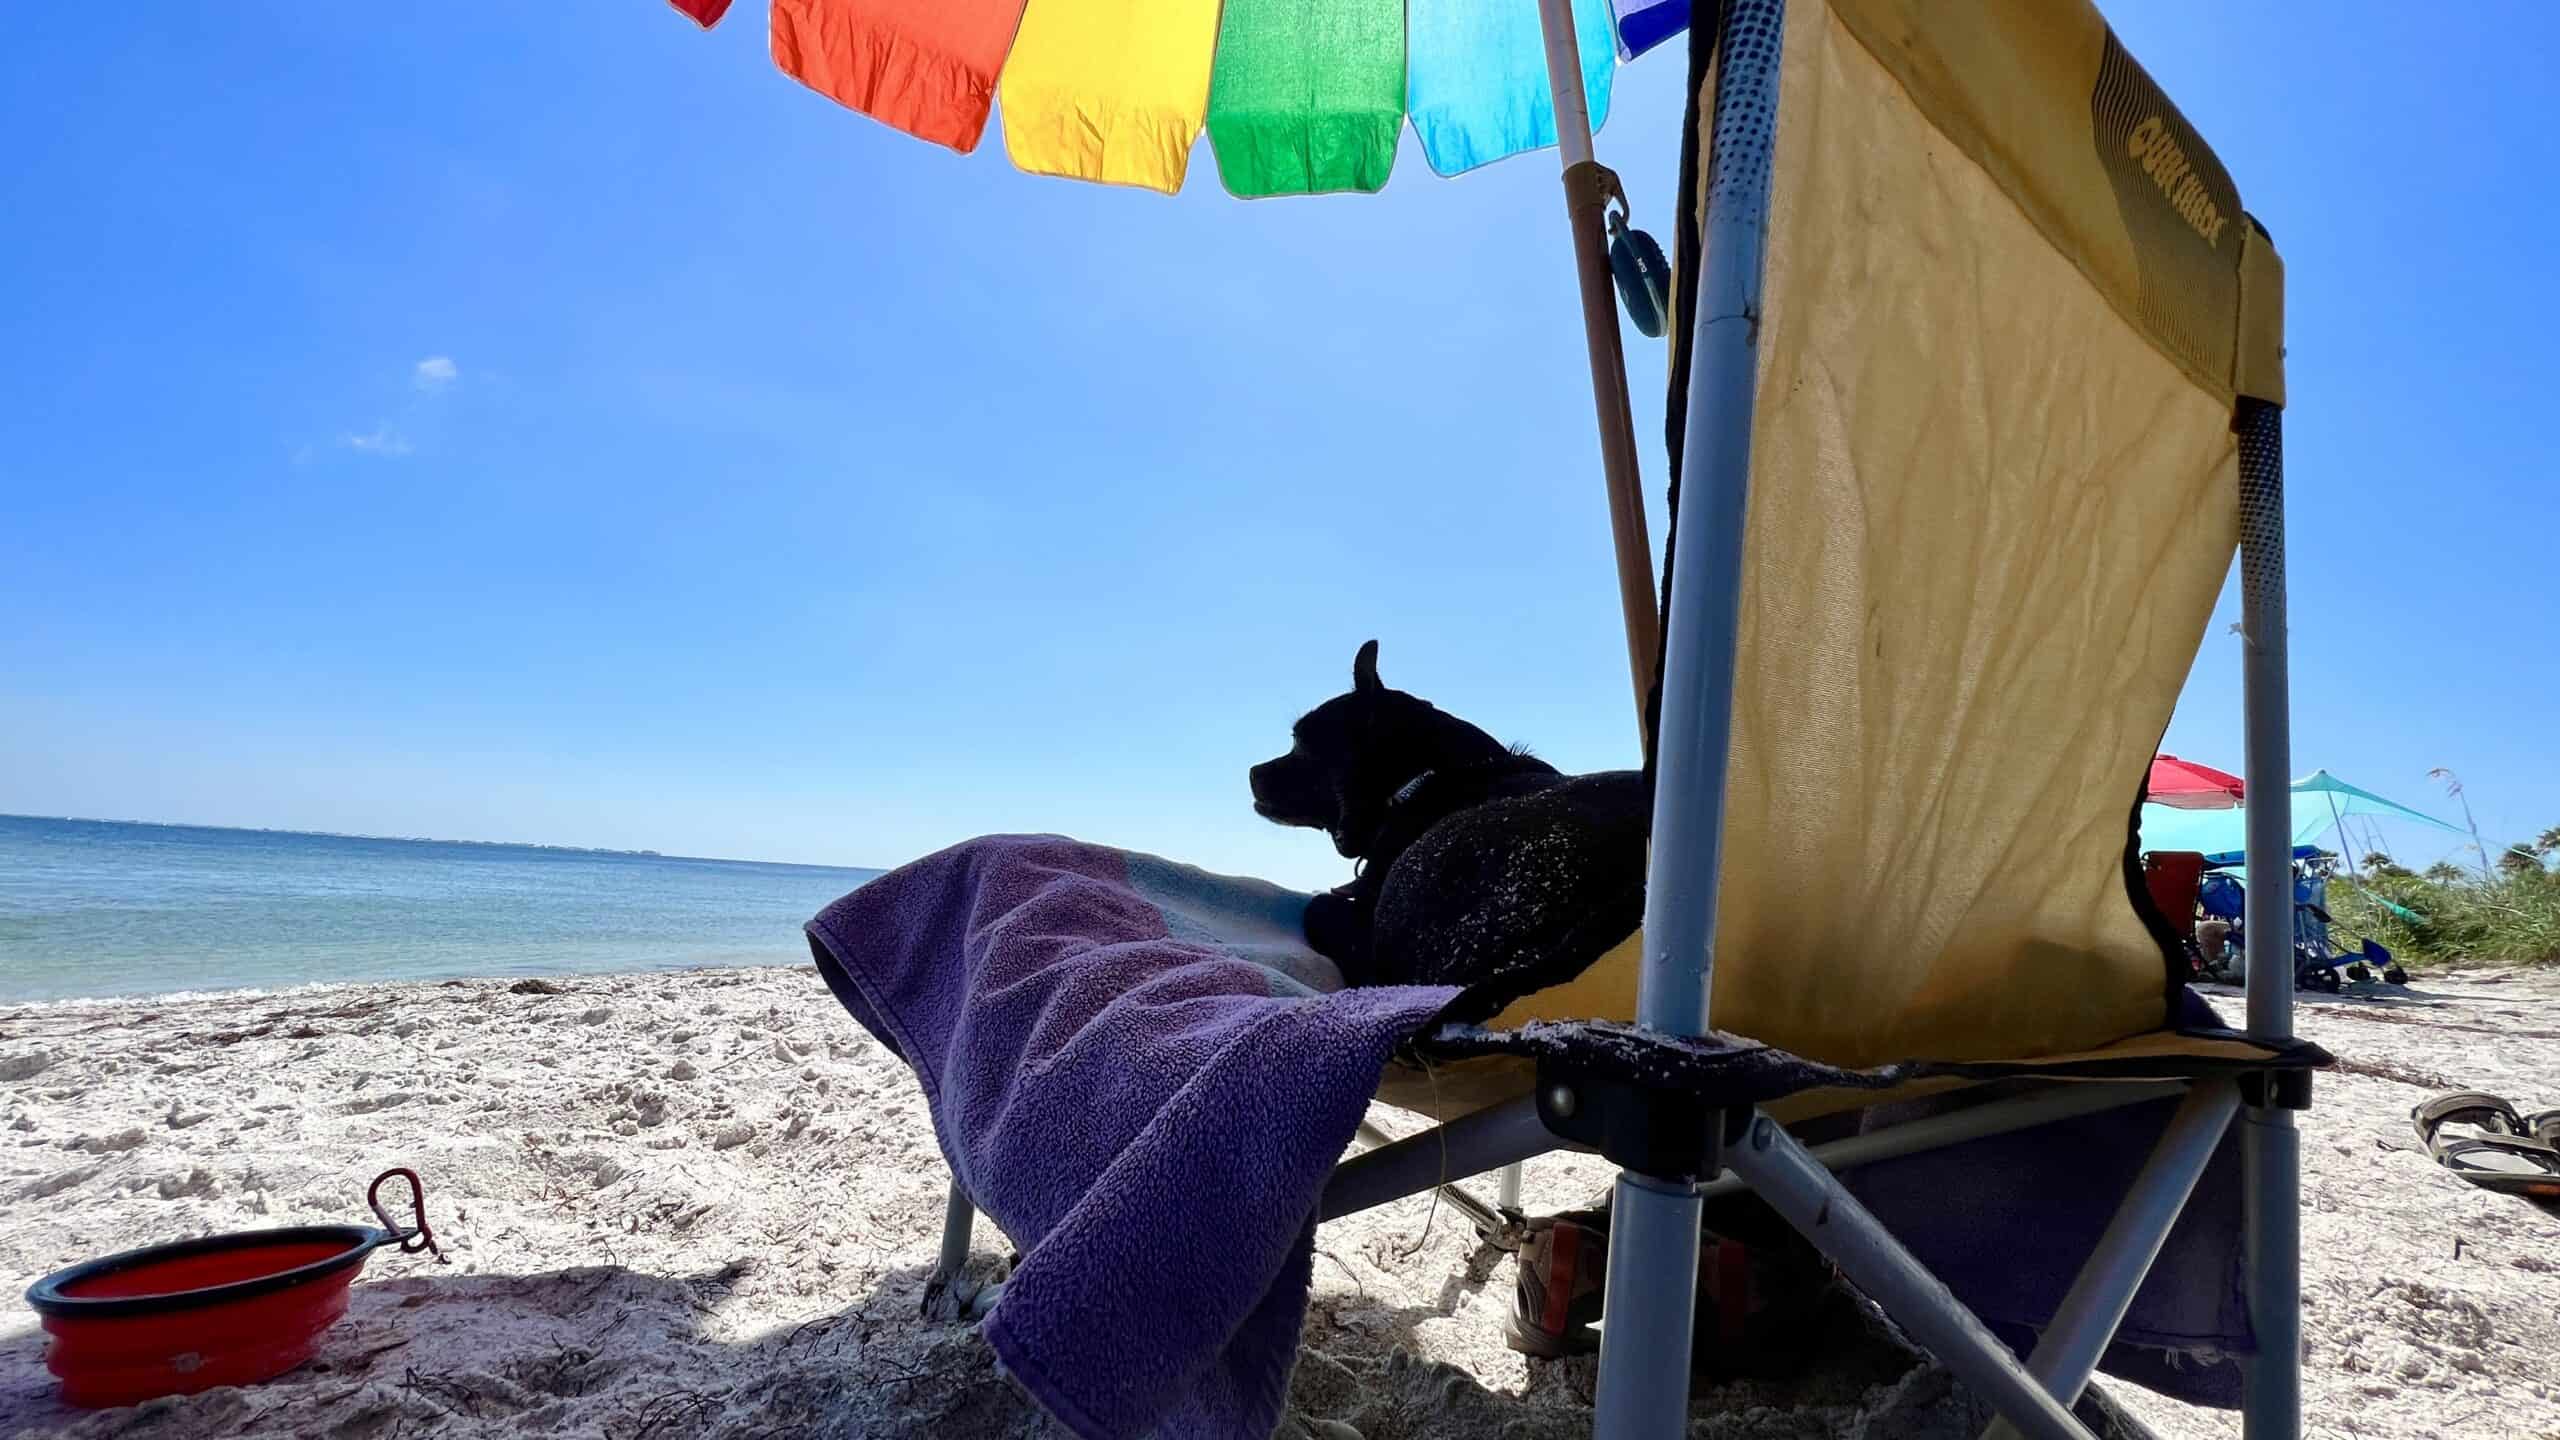 Avoiding sunburn at the beach under a beach umbrella